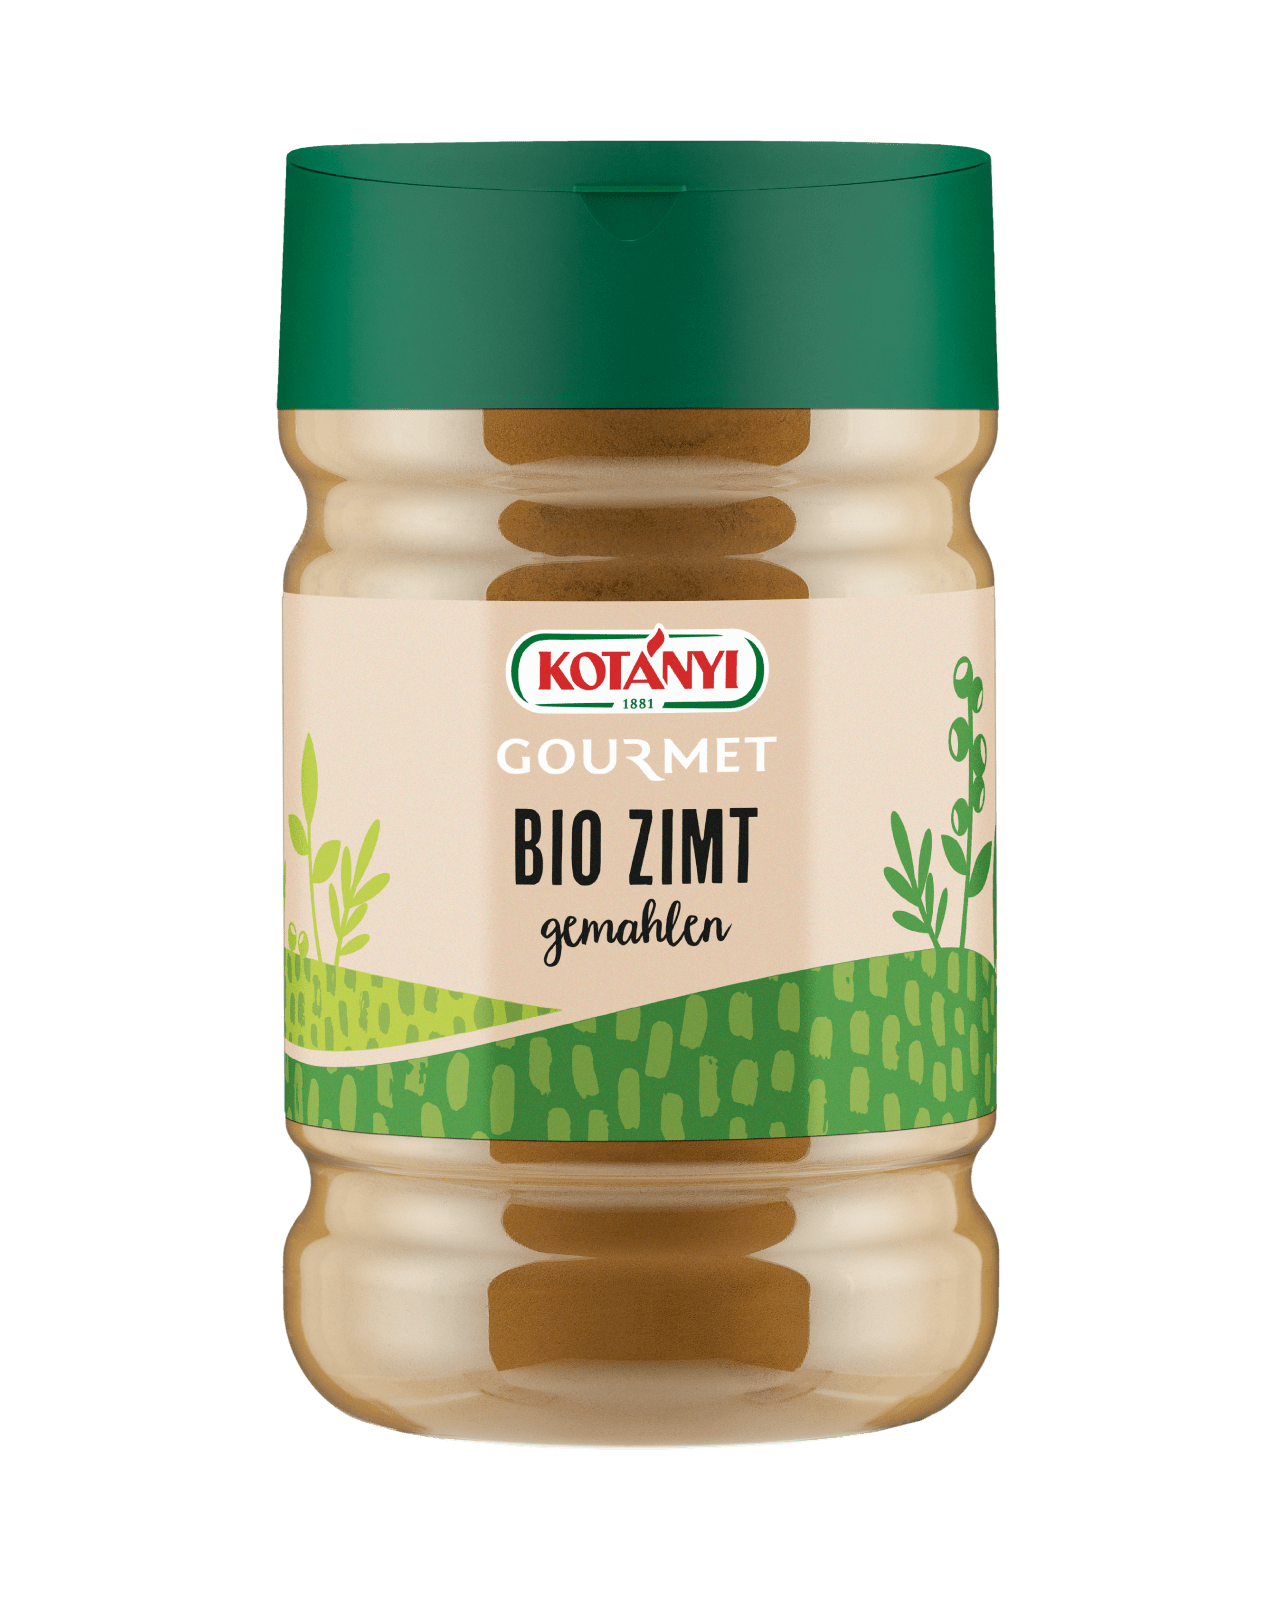 Kotányi Gourmet Bio Zimt gemahlen in der 1200ccm Dose